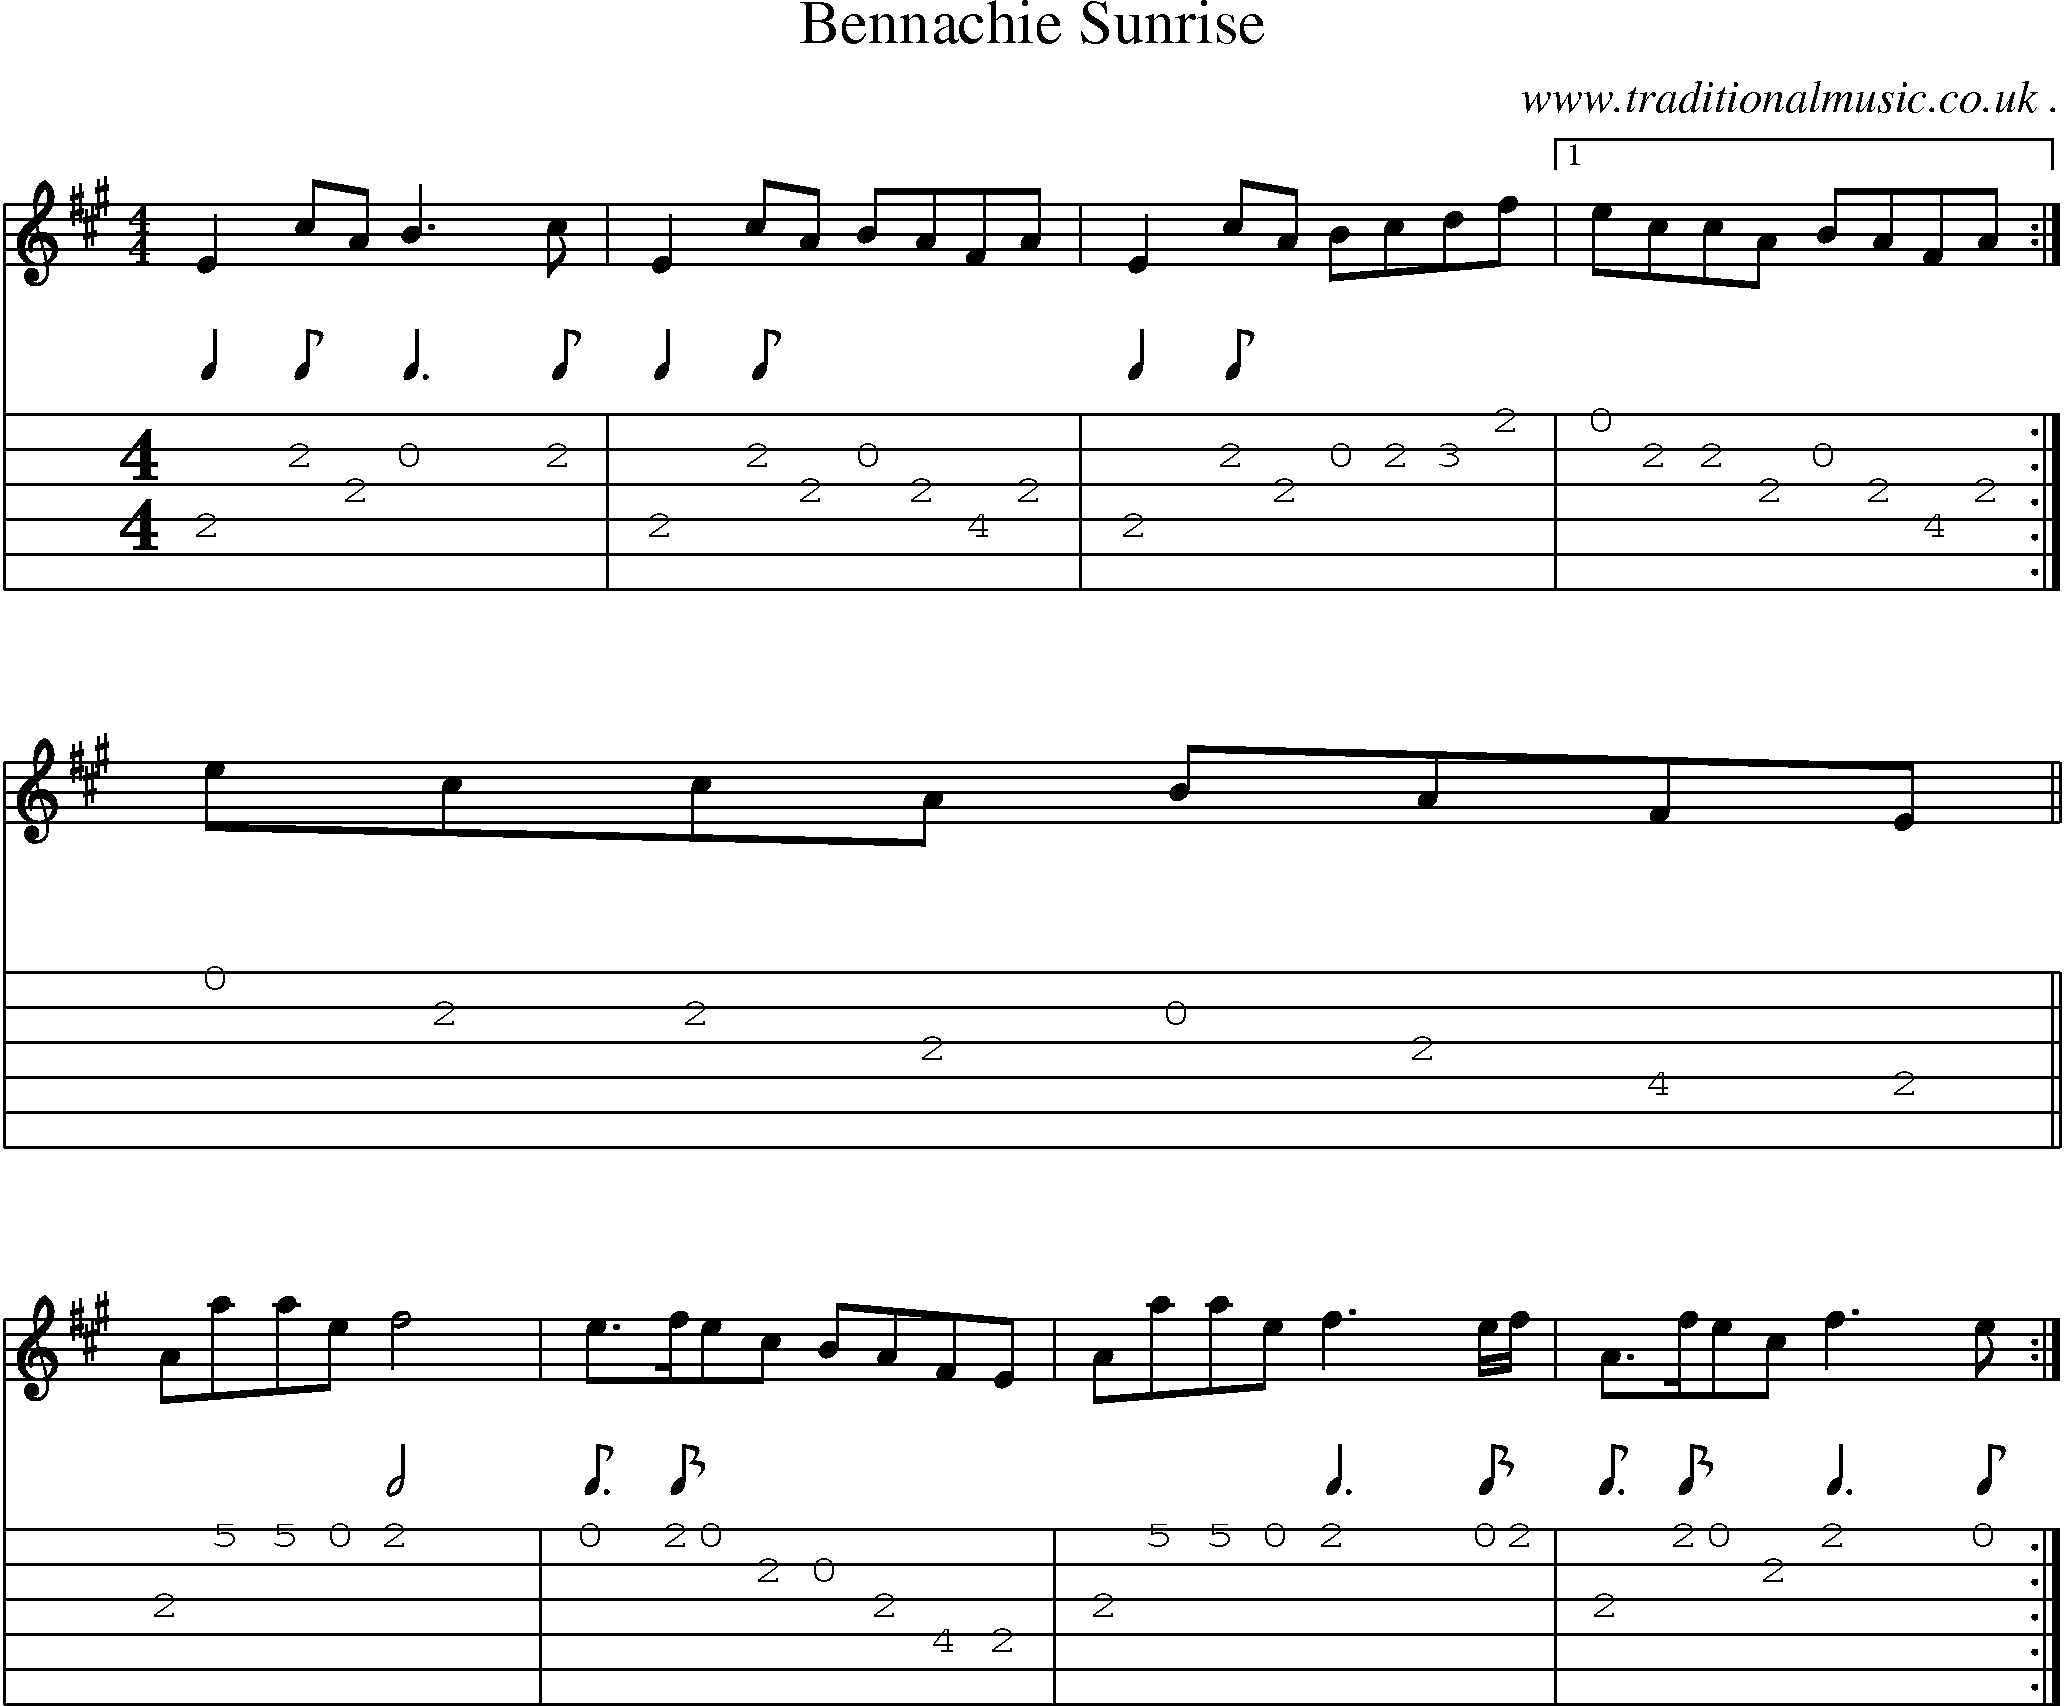 Sheet-music  score, Chords and Guitar Tabs for Bennachie Sunrise